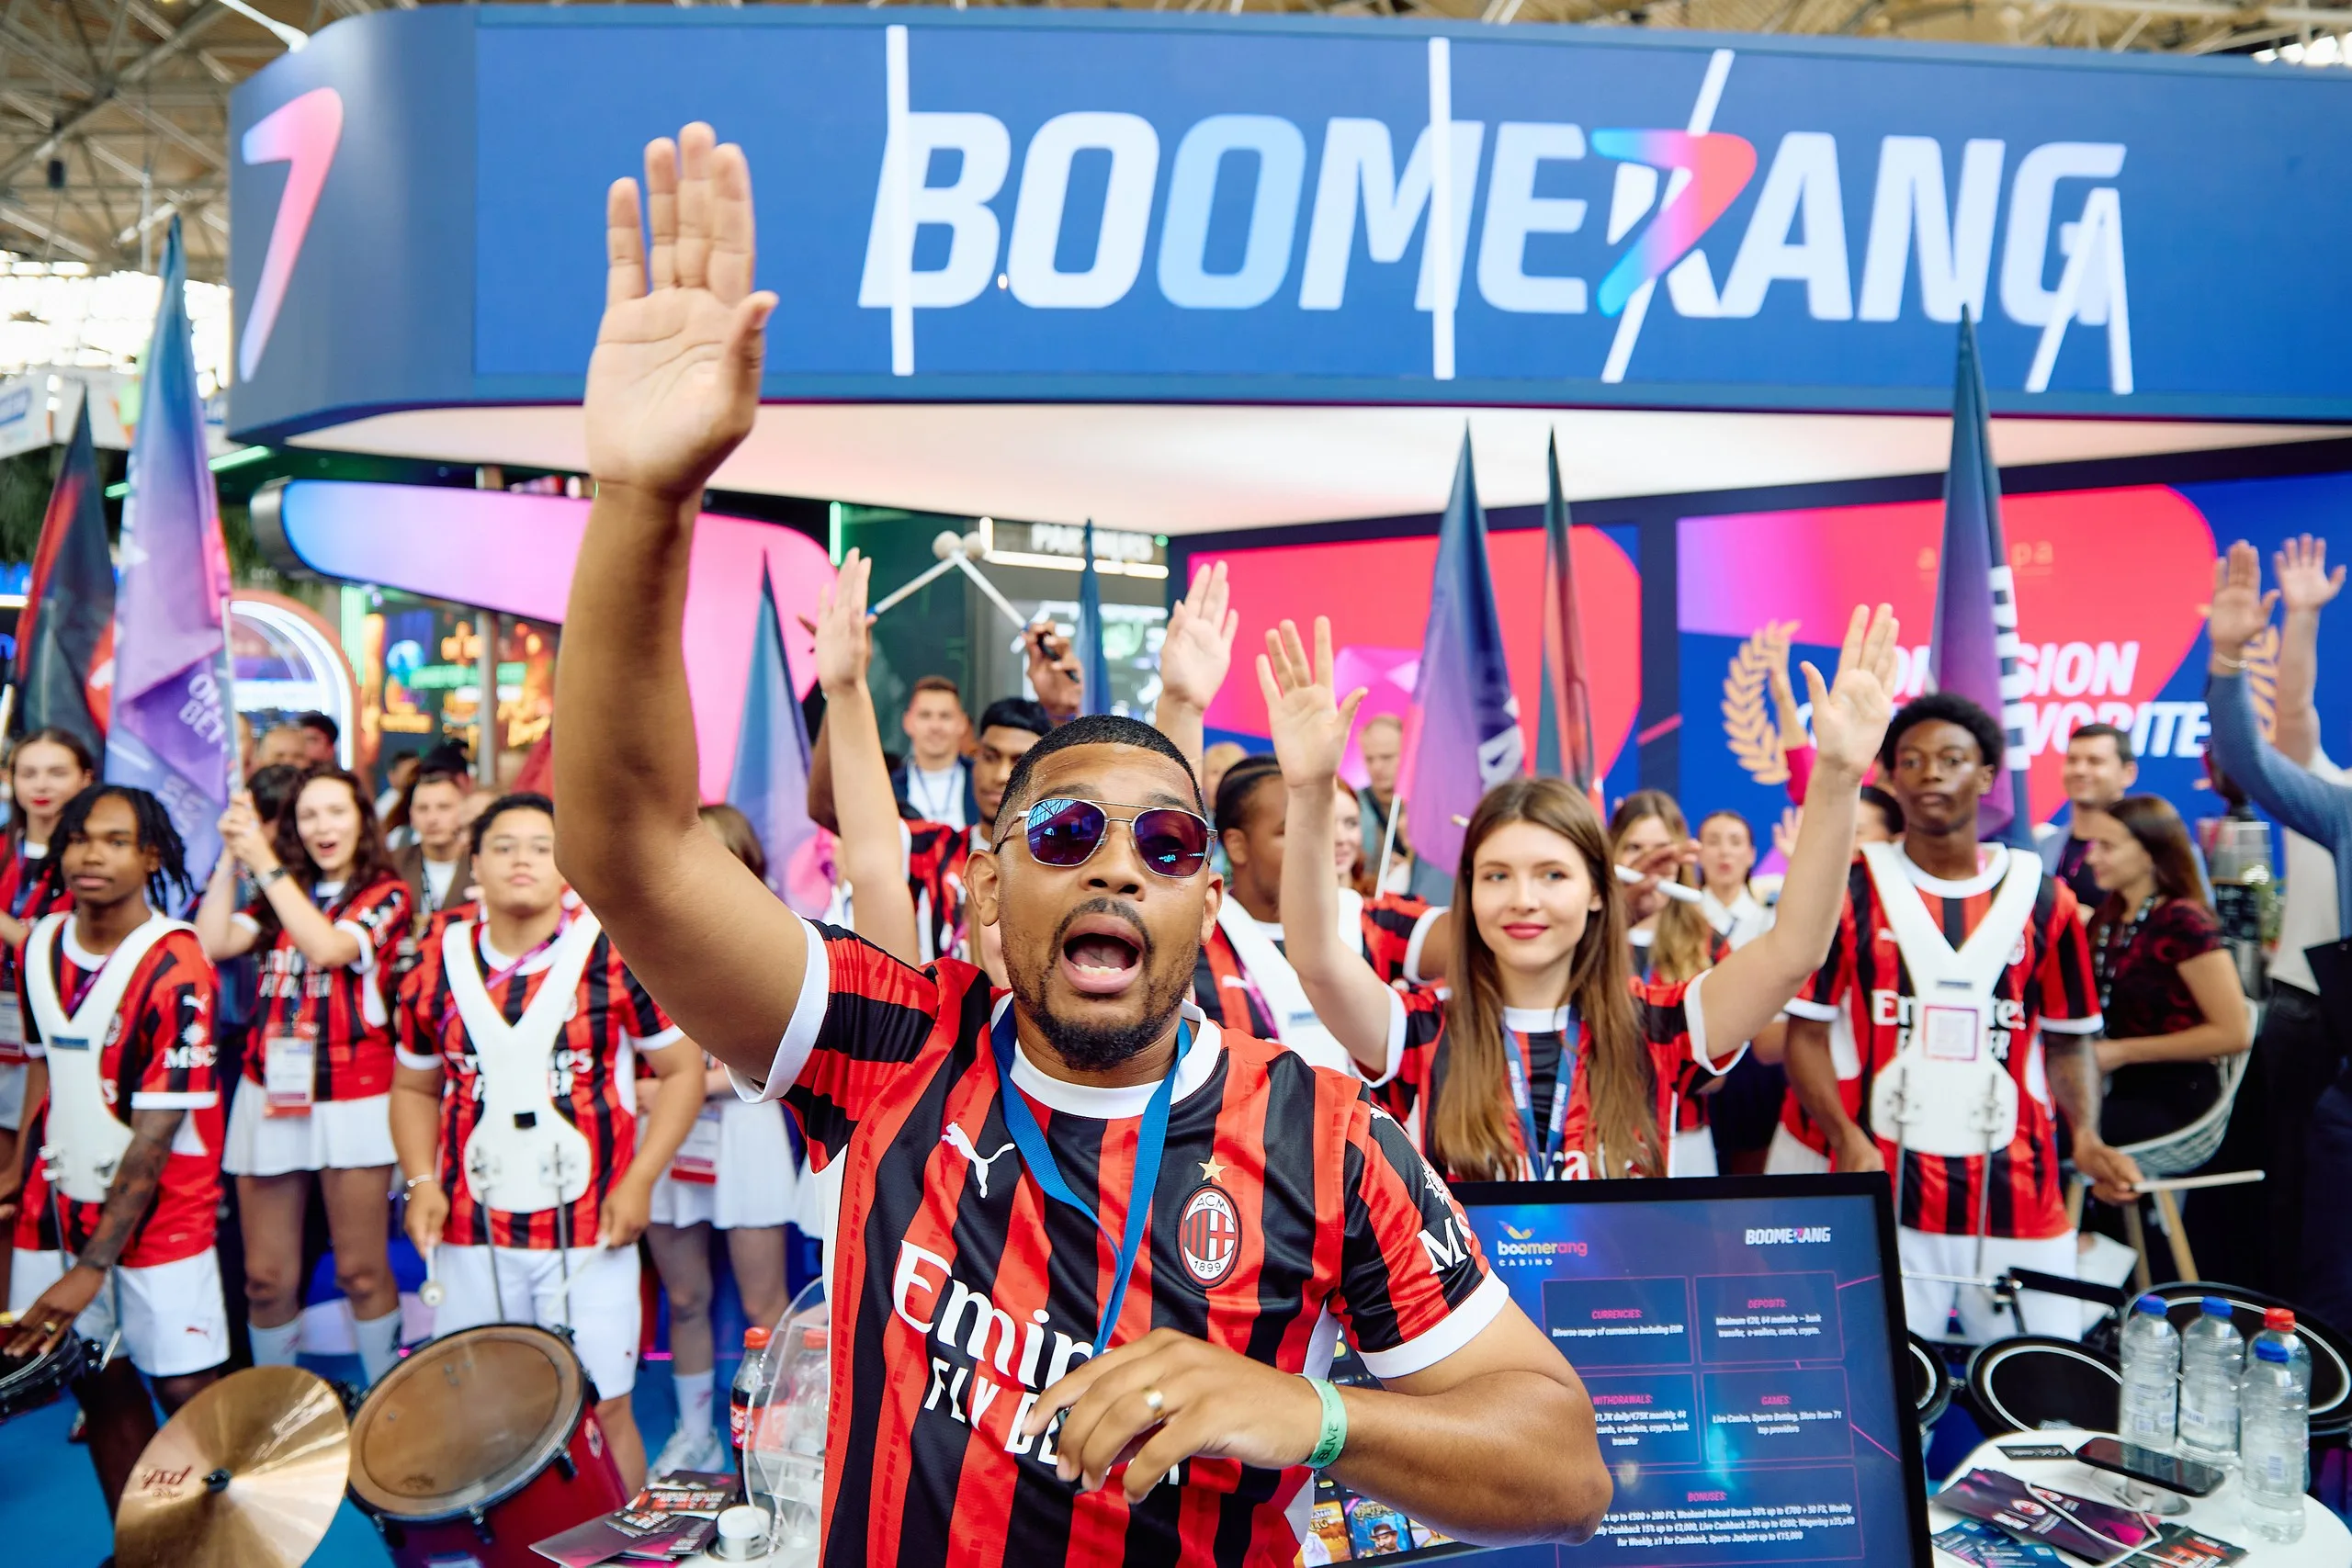 Boomerang Highlights AC Milan Partnership at iGB with Match Ticket Giveaways